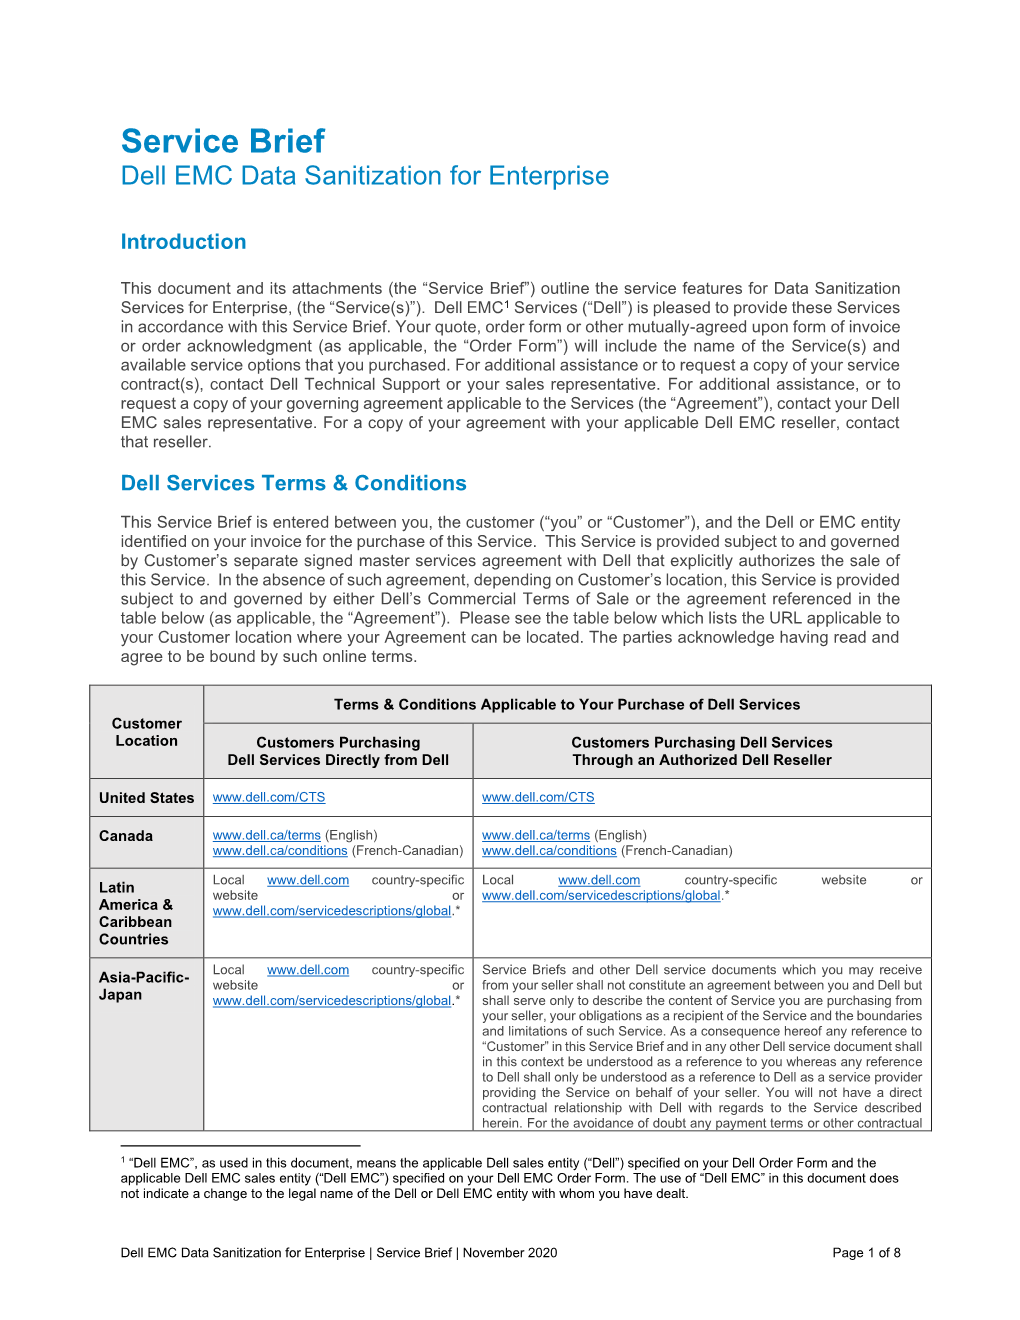 Service Brief Dell EMC Data Sanitization for Enterprise